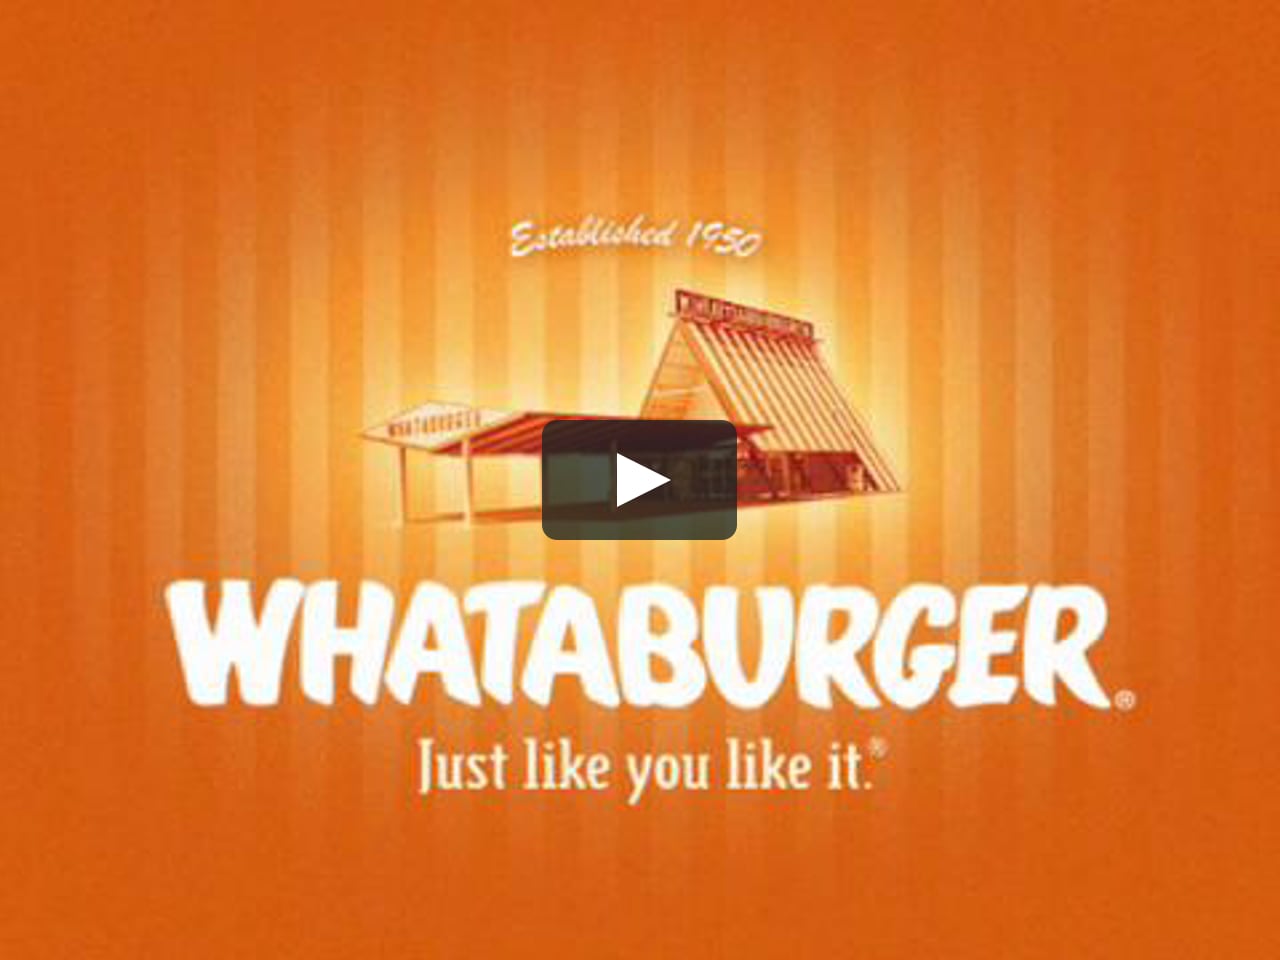 Whataburger TV Commercial on Vimeo